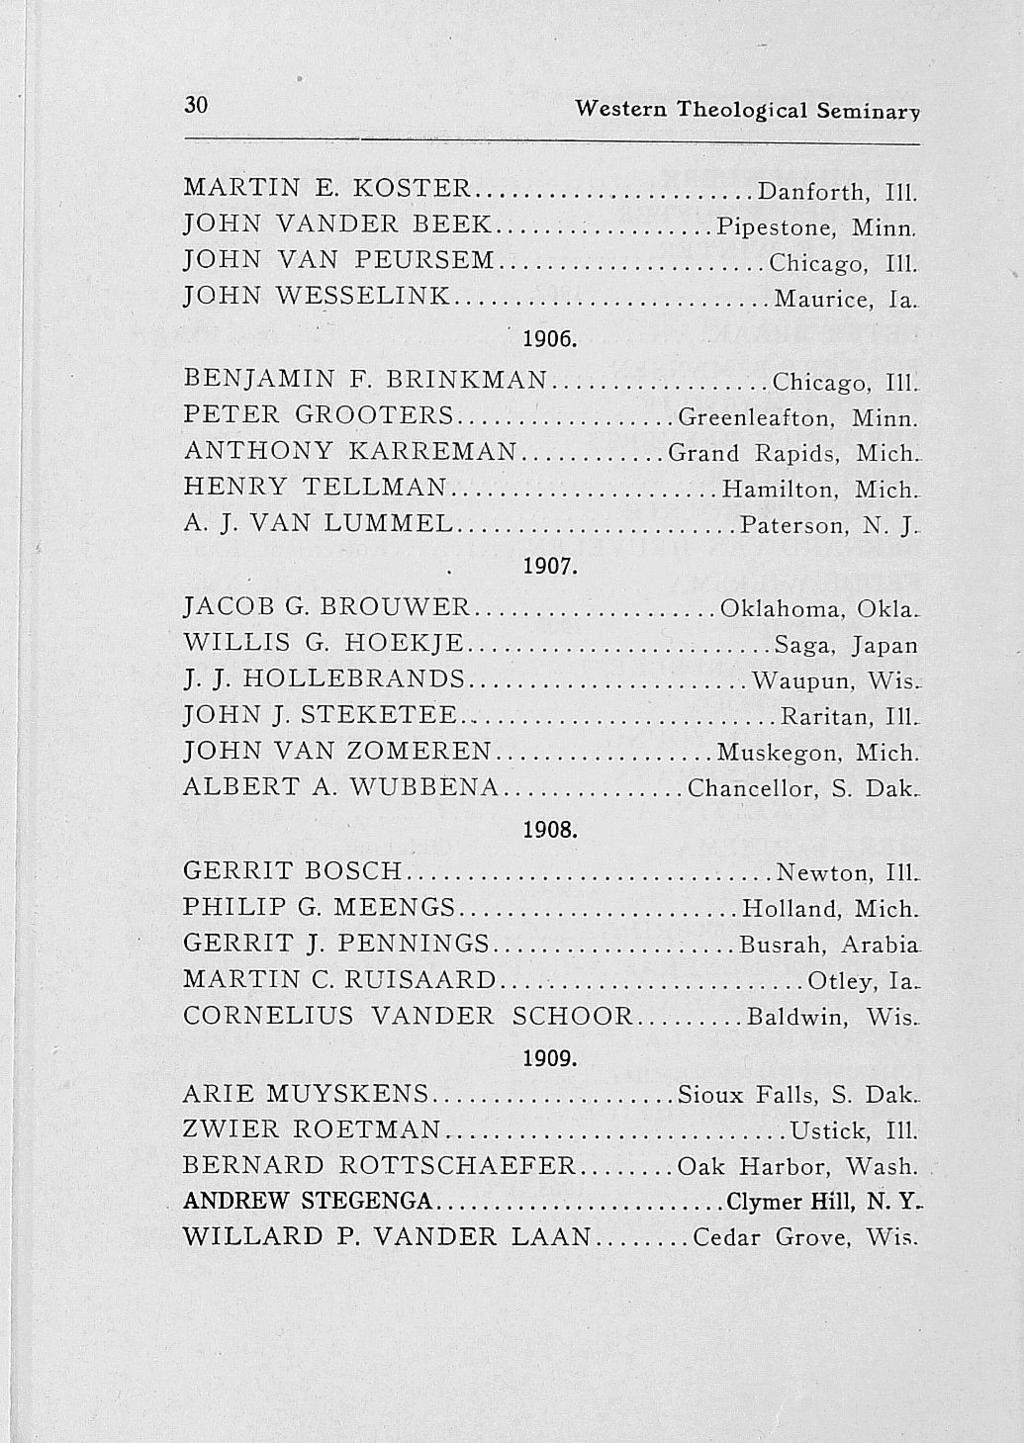 30 Western Theological Seminary MARTIN E. KOSTER... Danforth, 111. JOHN VANDER BEEK....... Pipestone, Minn. JOHN VAN PEURSEM... Chicago, 111. JOHN WESSELINK... Maurice, la. 1906. BENJAMIN F. BRINKMAN.